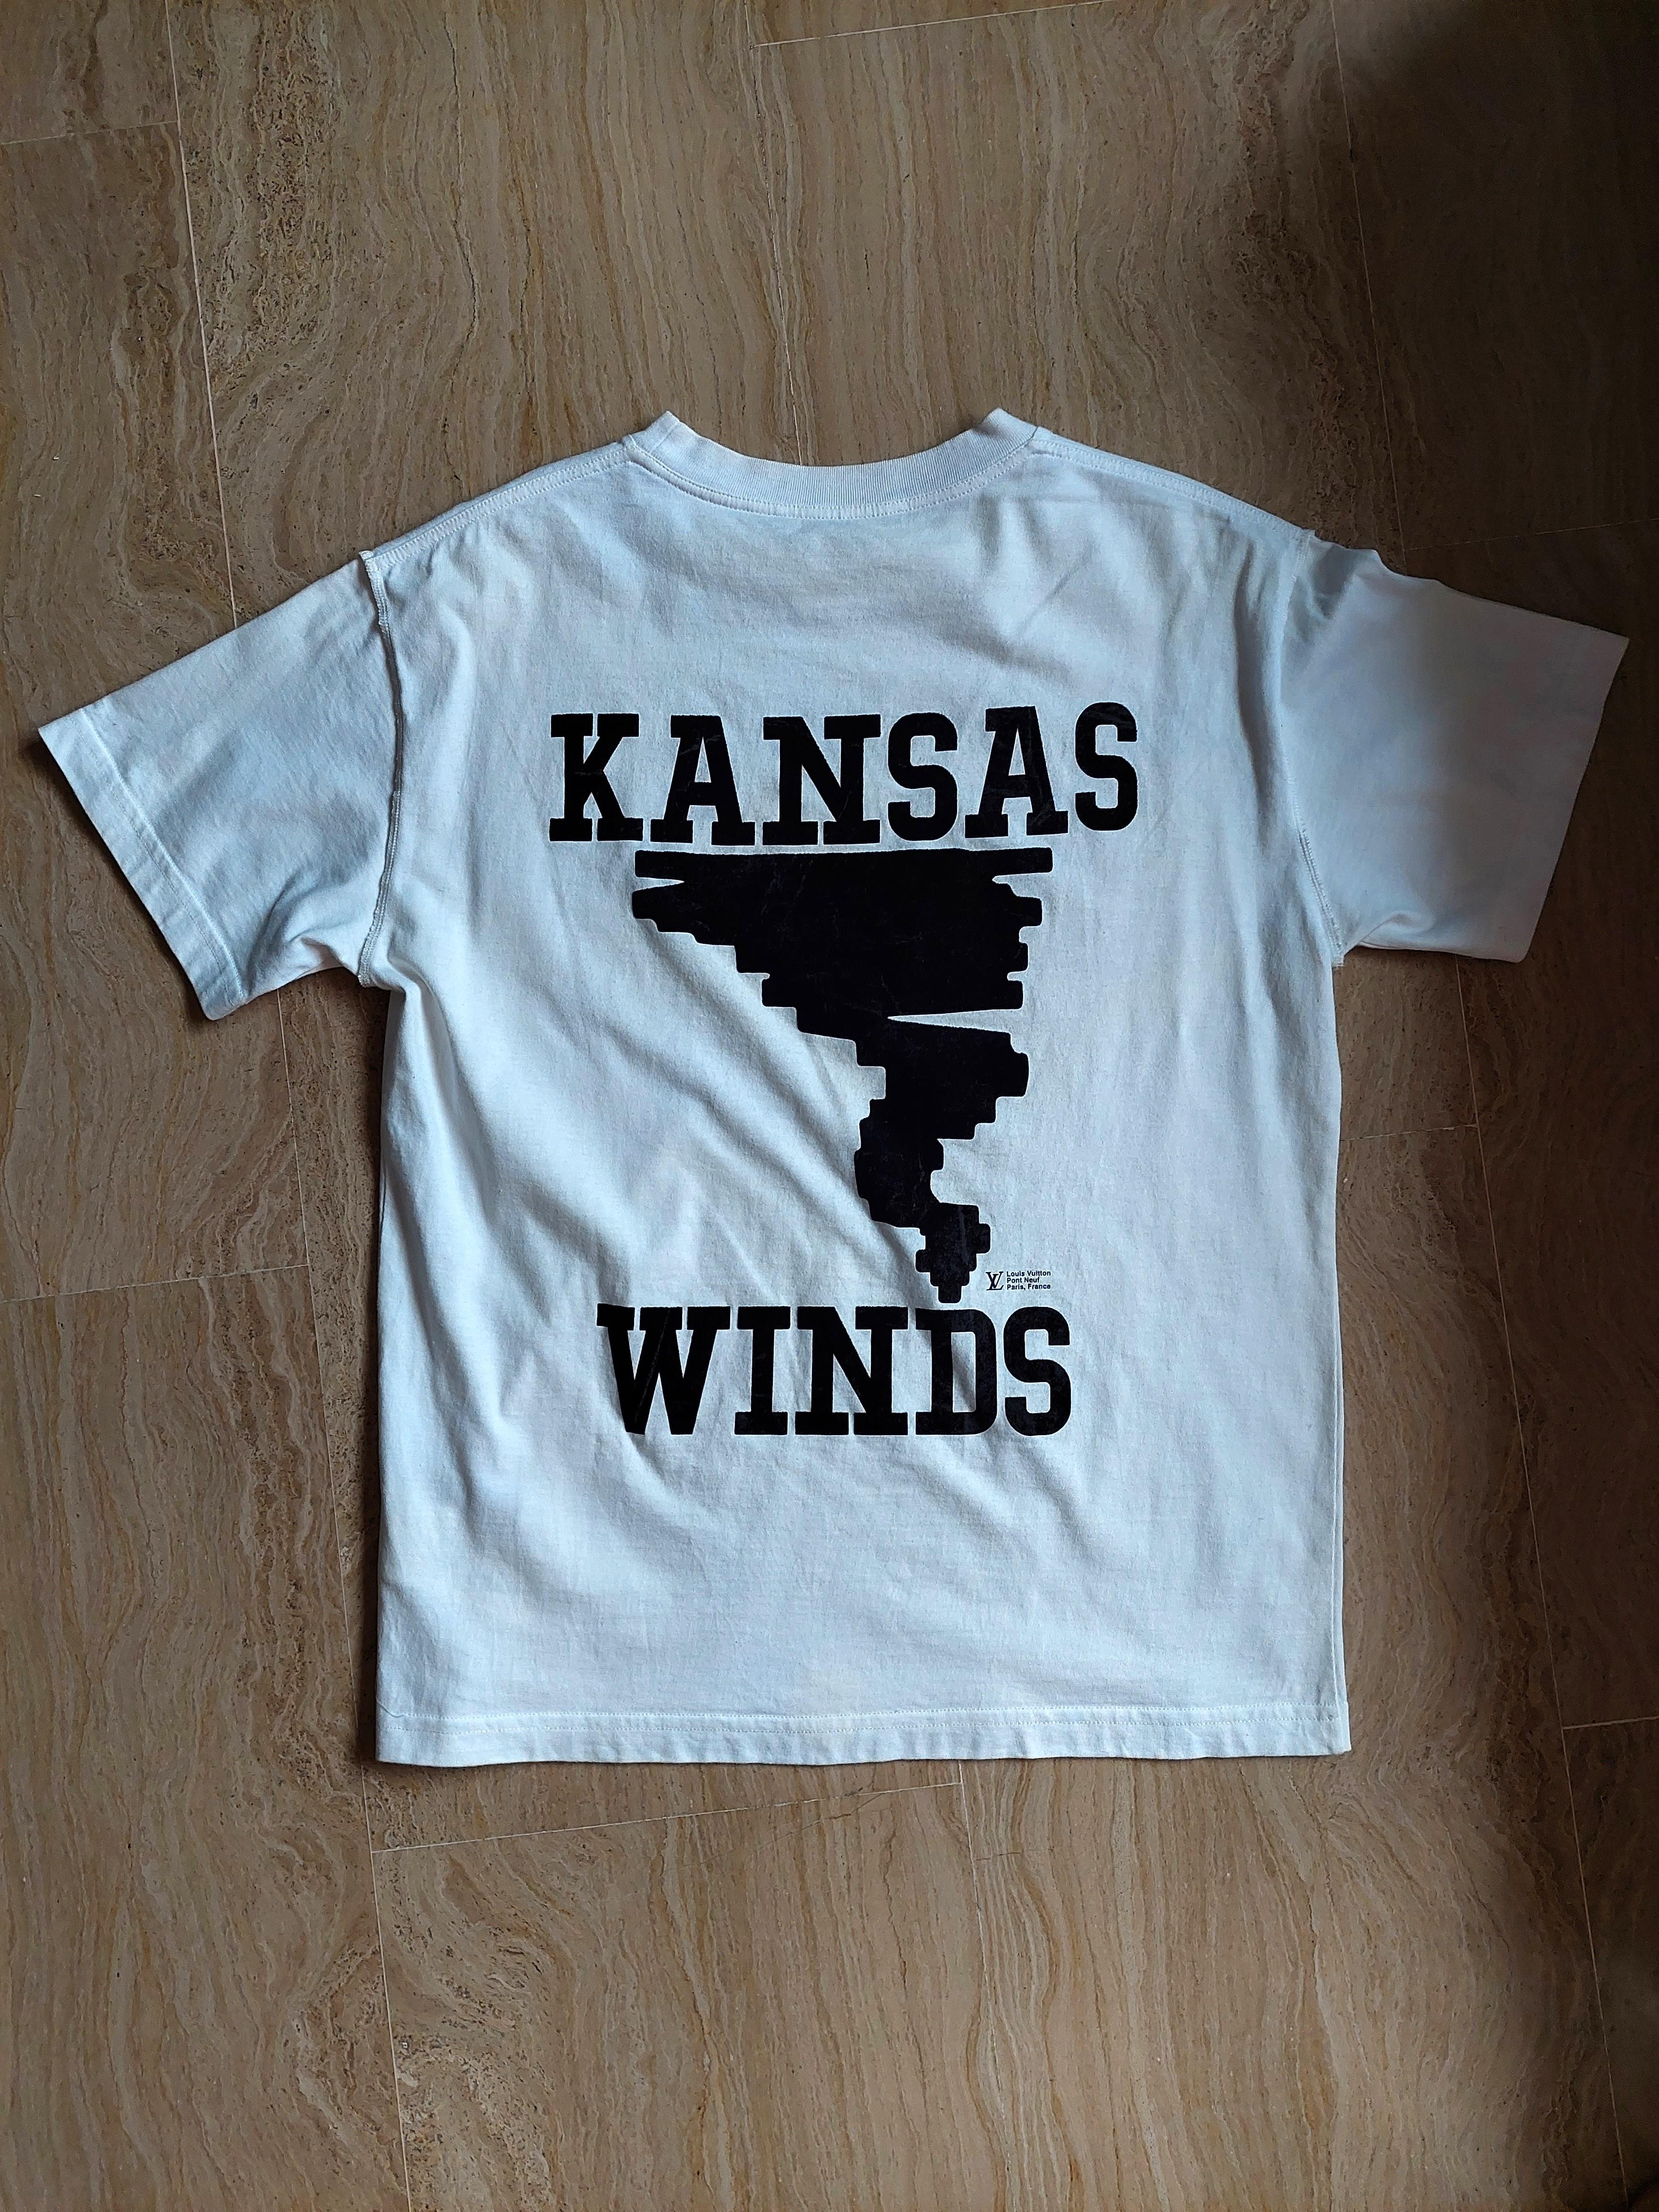 Lv Kansas winds tee